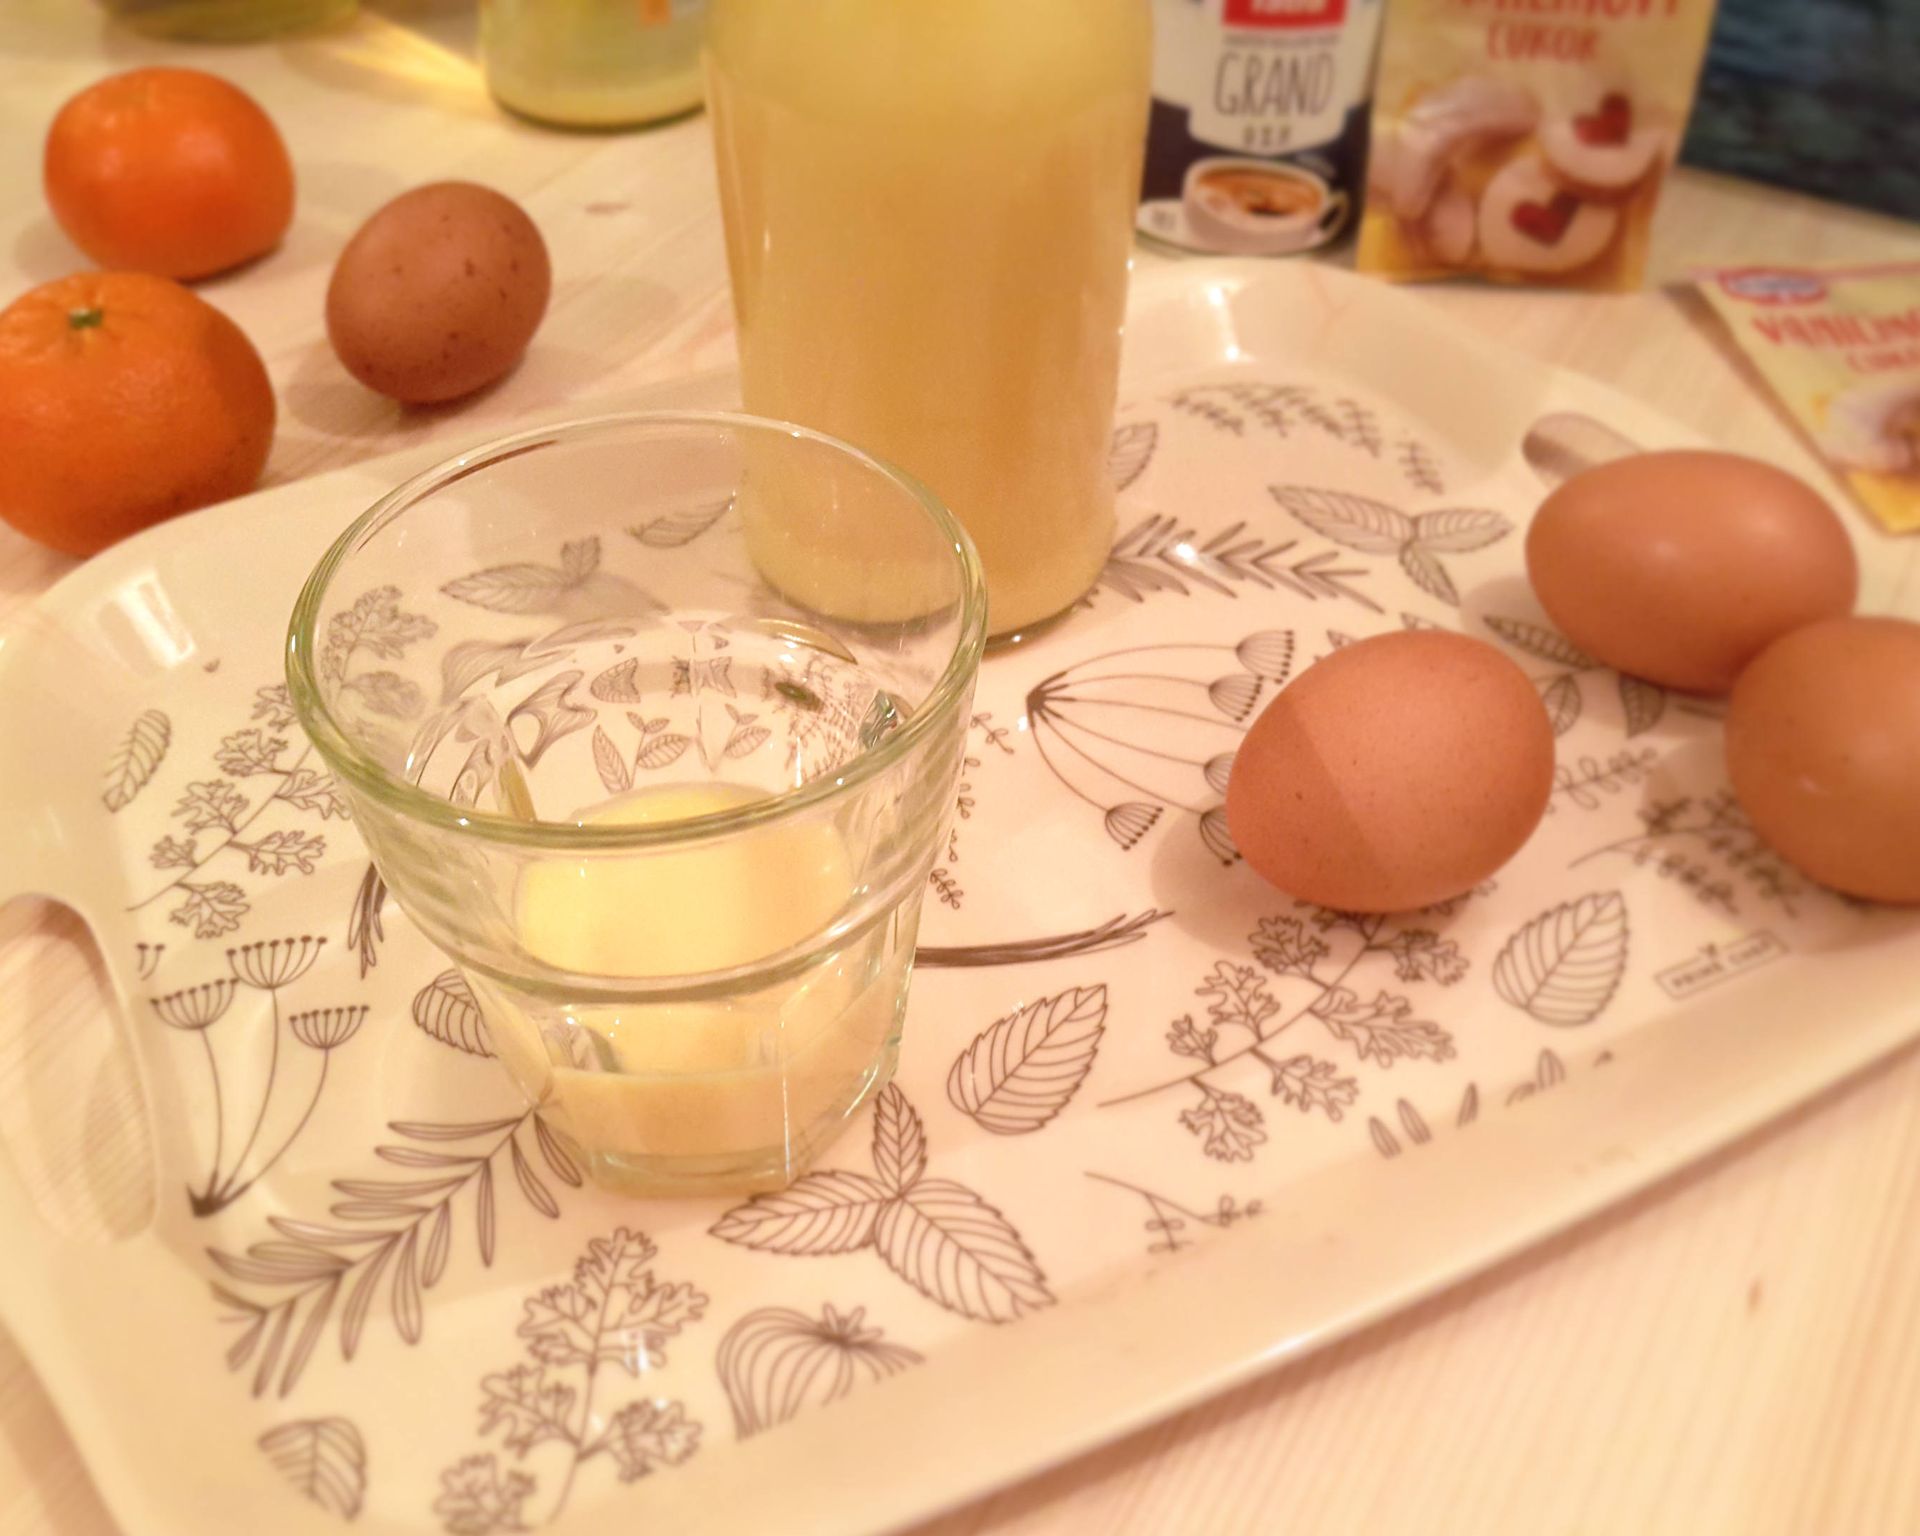 Vajcový likér v pohári, v pozadí fľaška plná likéru, vajíčka na tácke